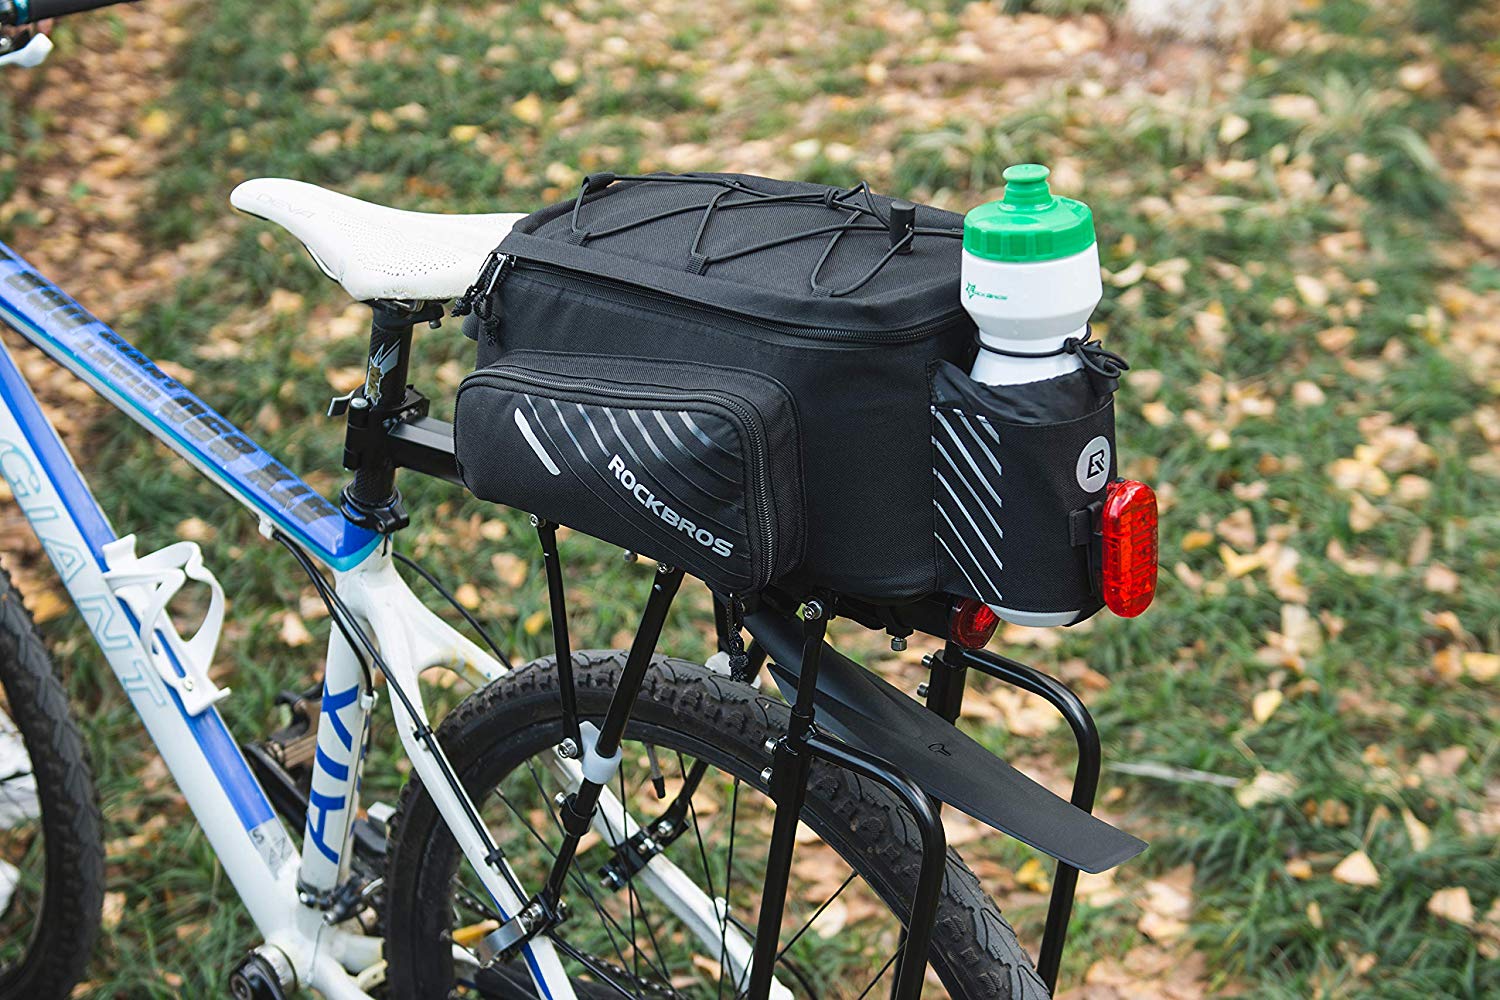 Amomo Folding Bike Travel Bag Foldaway Bicycle Transport Carrying Case For 26 29 Inch Folding Bike Review Bike Travel Bag Bike Trips Folding Bike